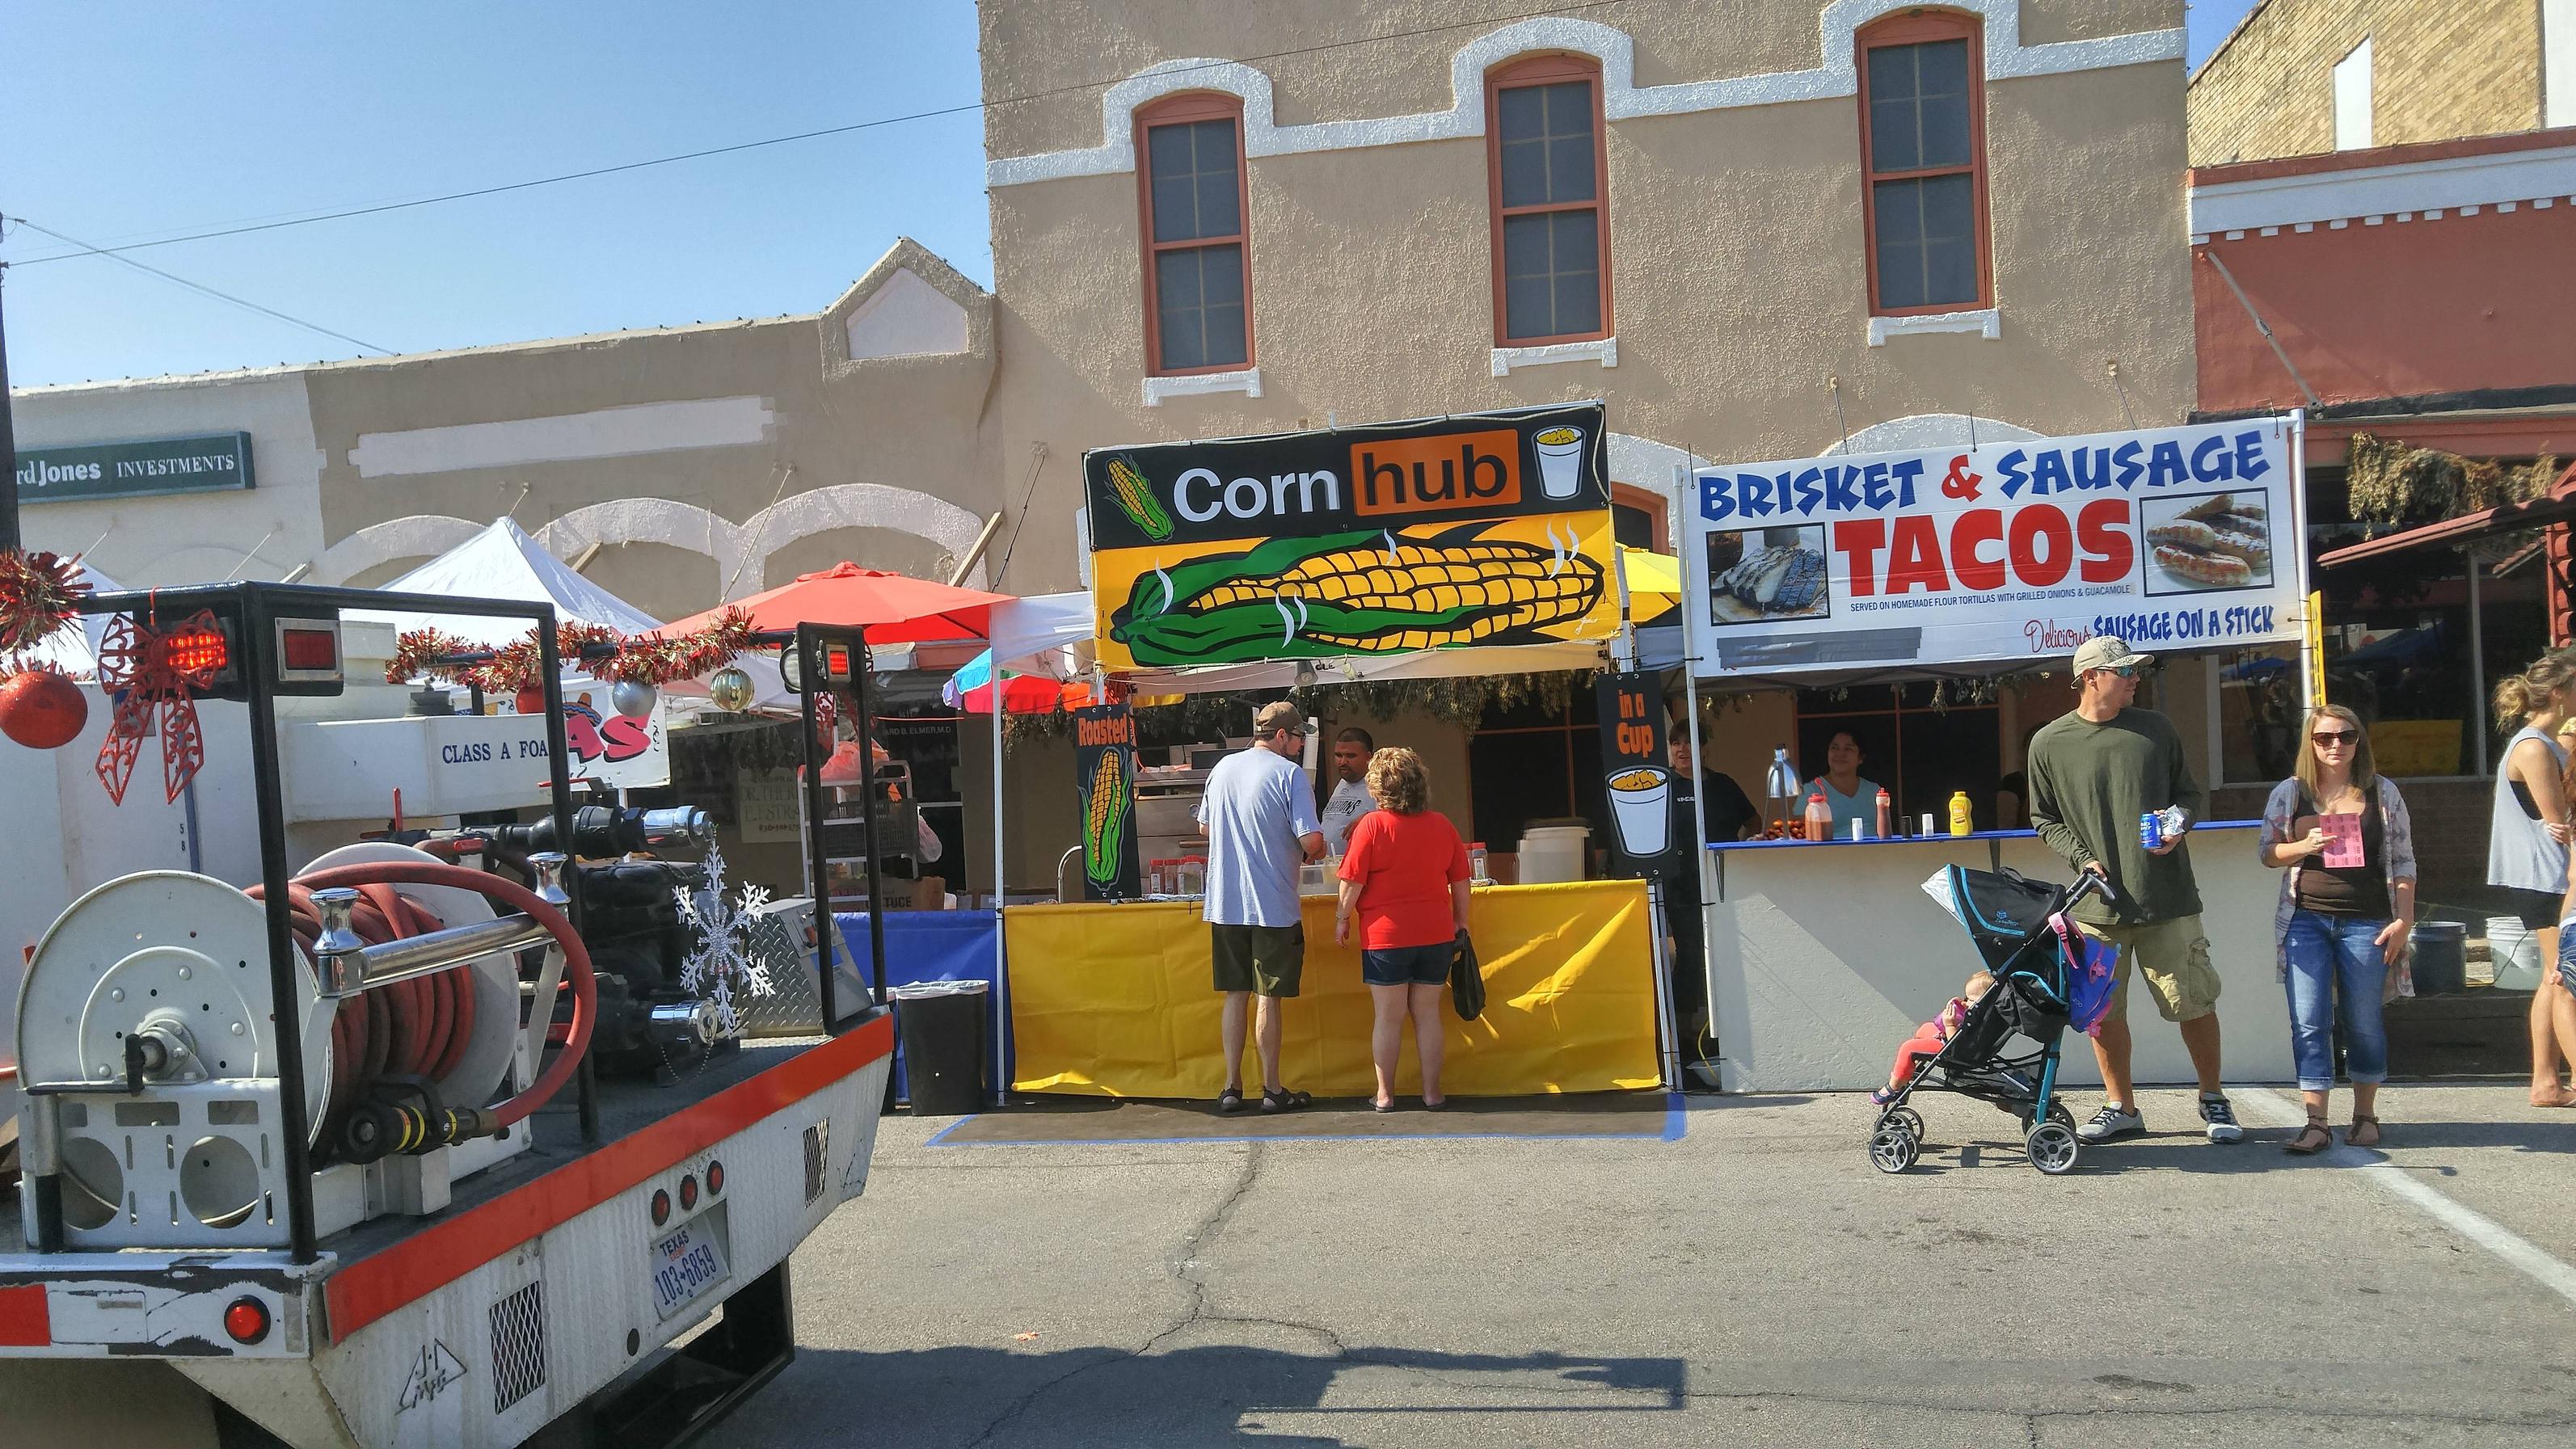 festival food booth - Jones Hot Corn hub Brisket & Sausage Tacos L Eonastice